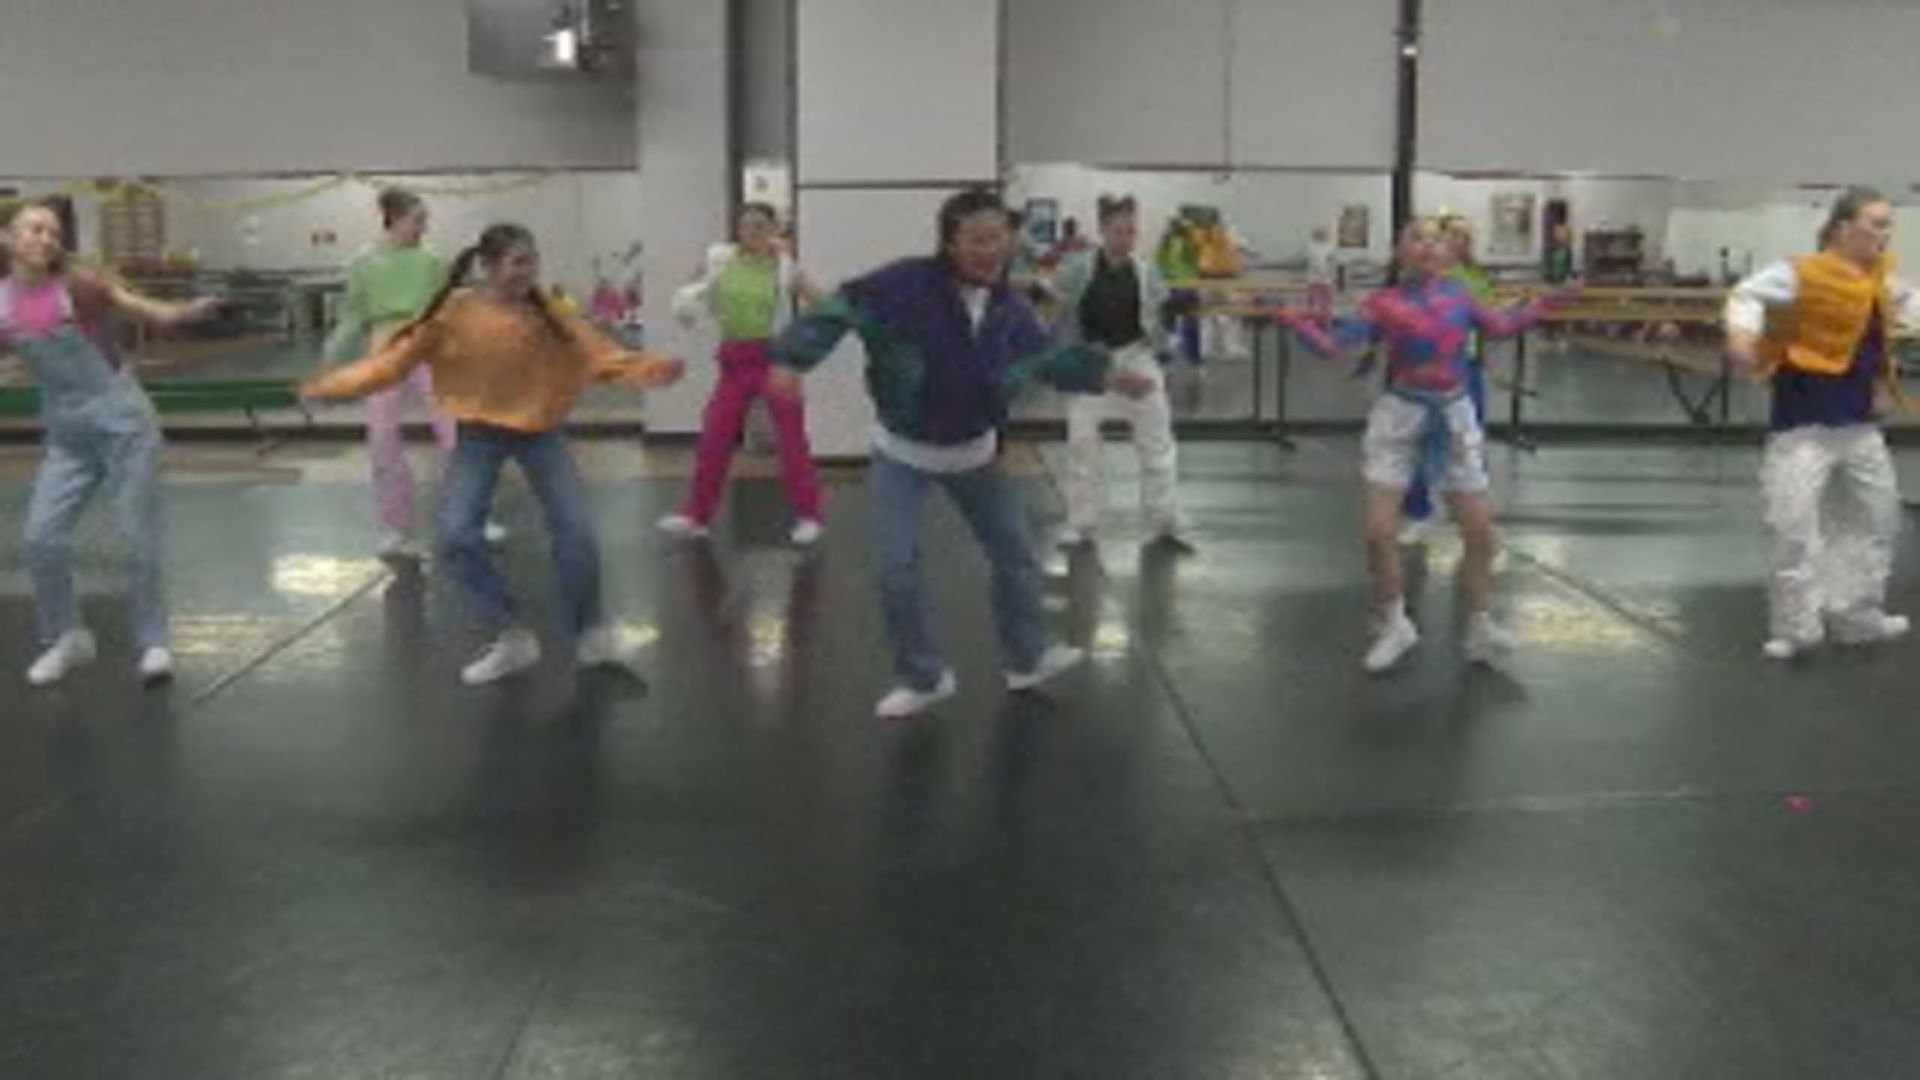 Lethbridge dance class hired for Mini Pop Kids gig